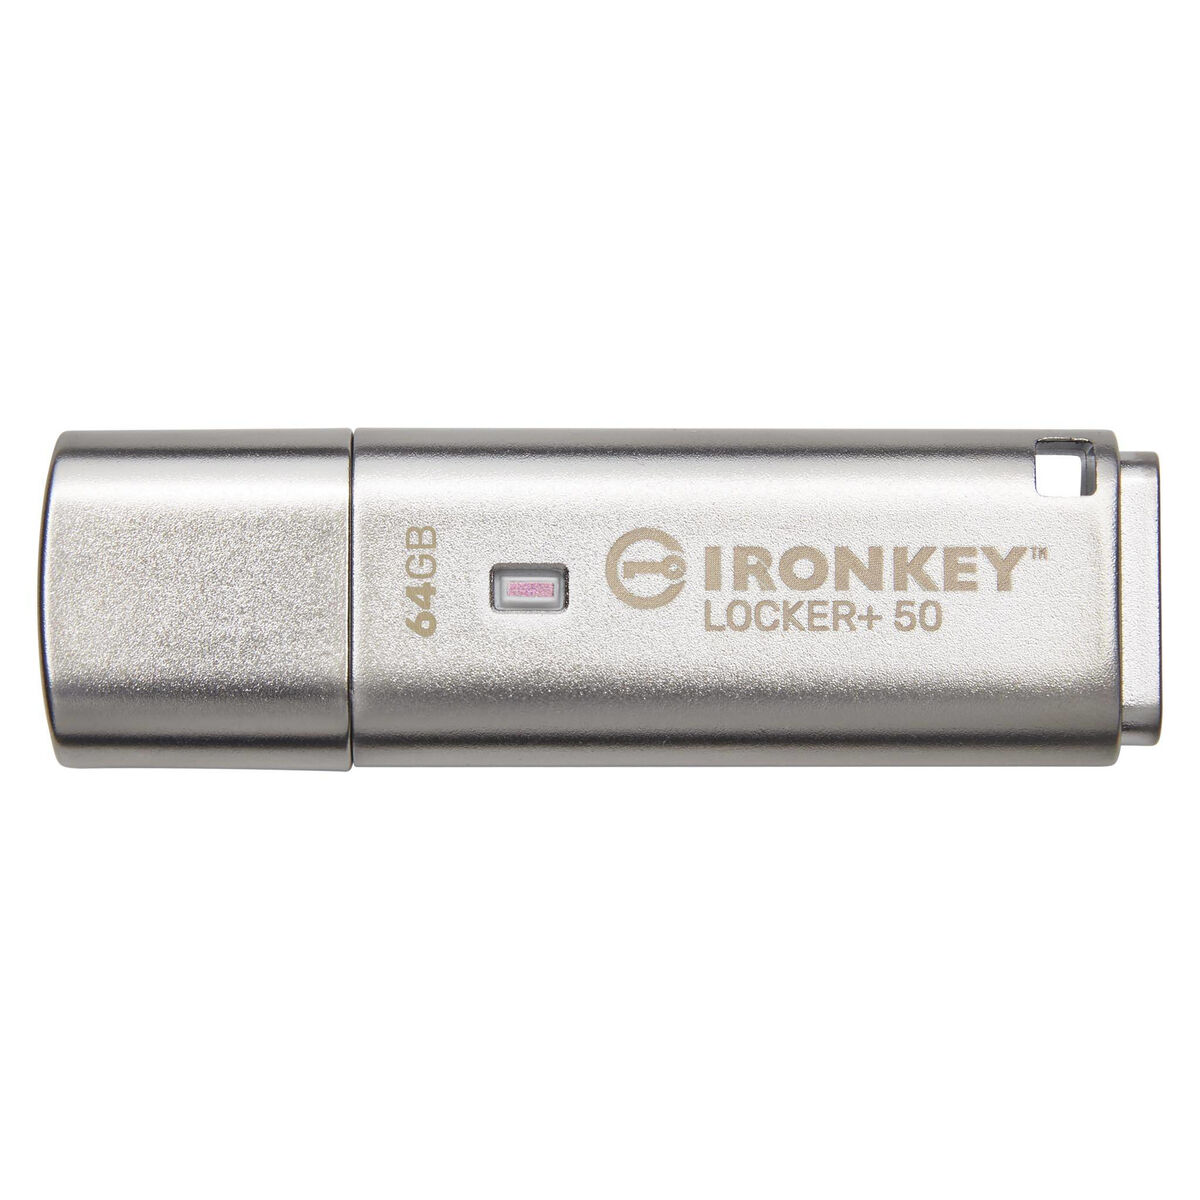 KINGSTON USB-Flash-Laufwerk Metall, IronKey 50 GB) 64 Locker+ (Seilber,